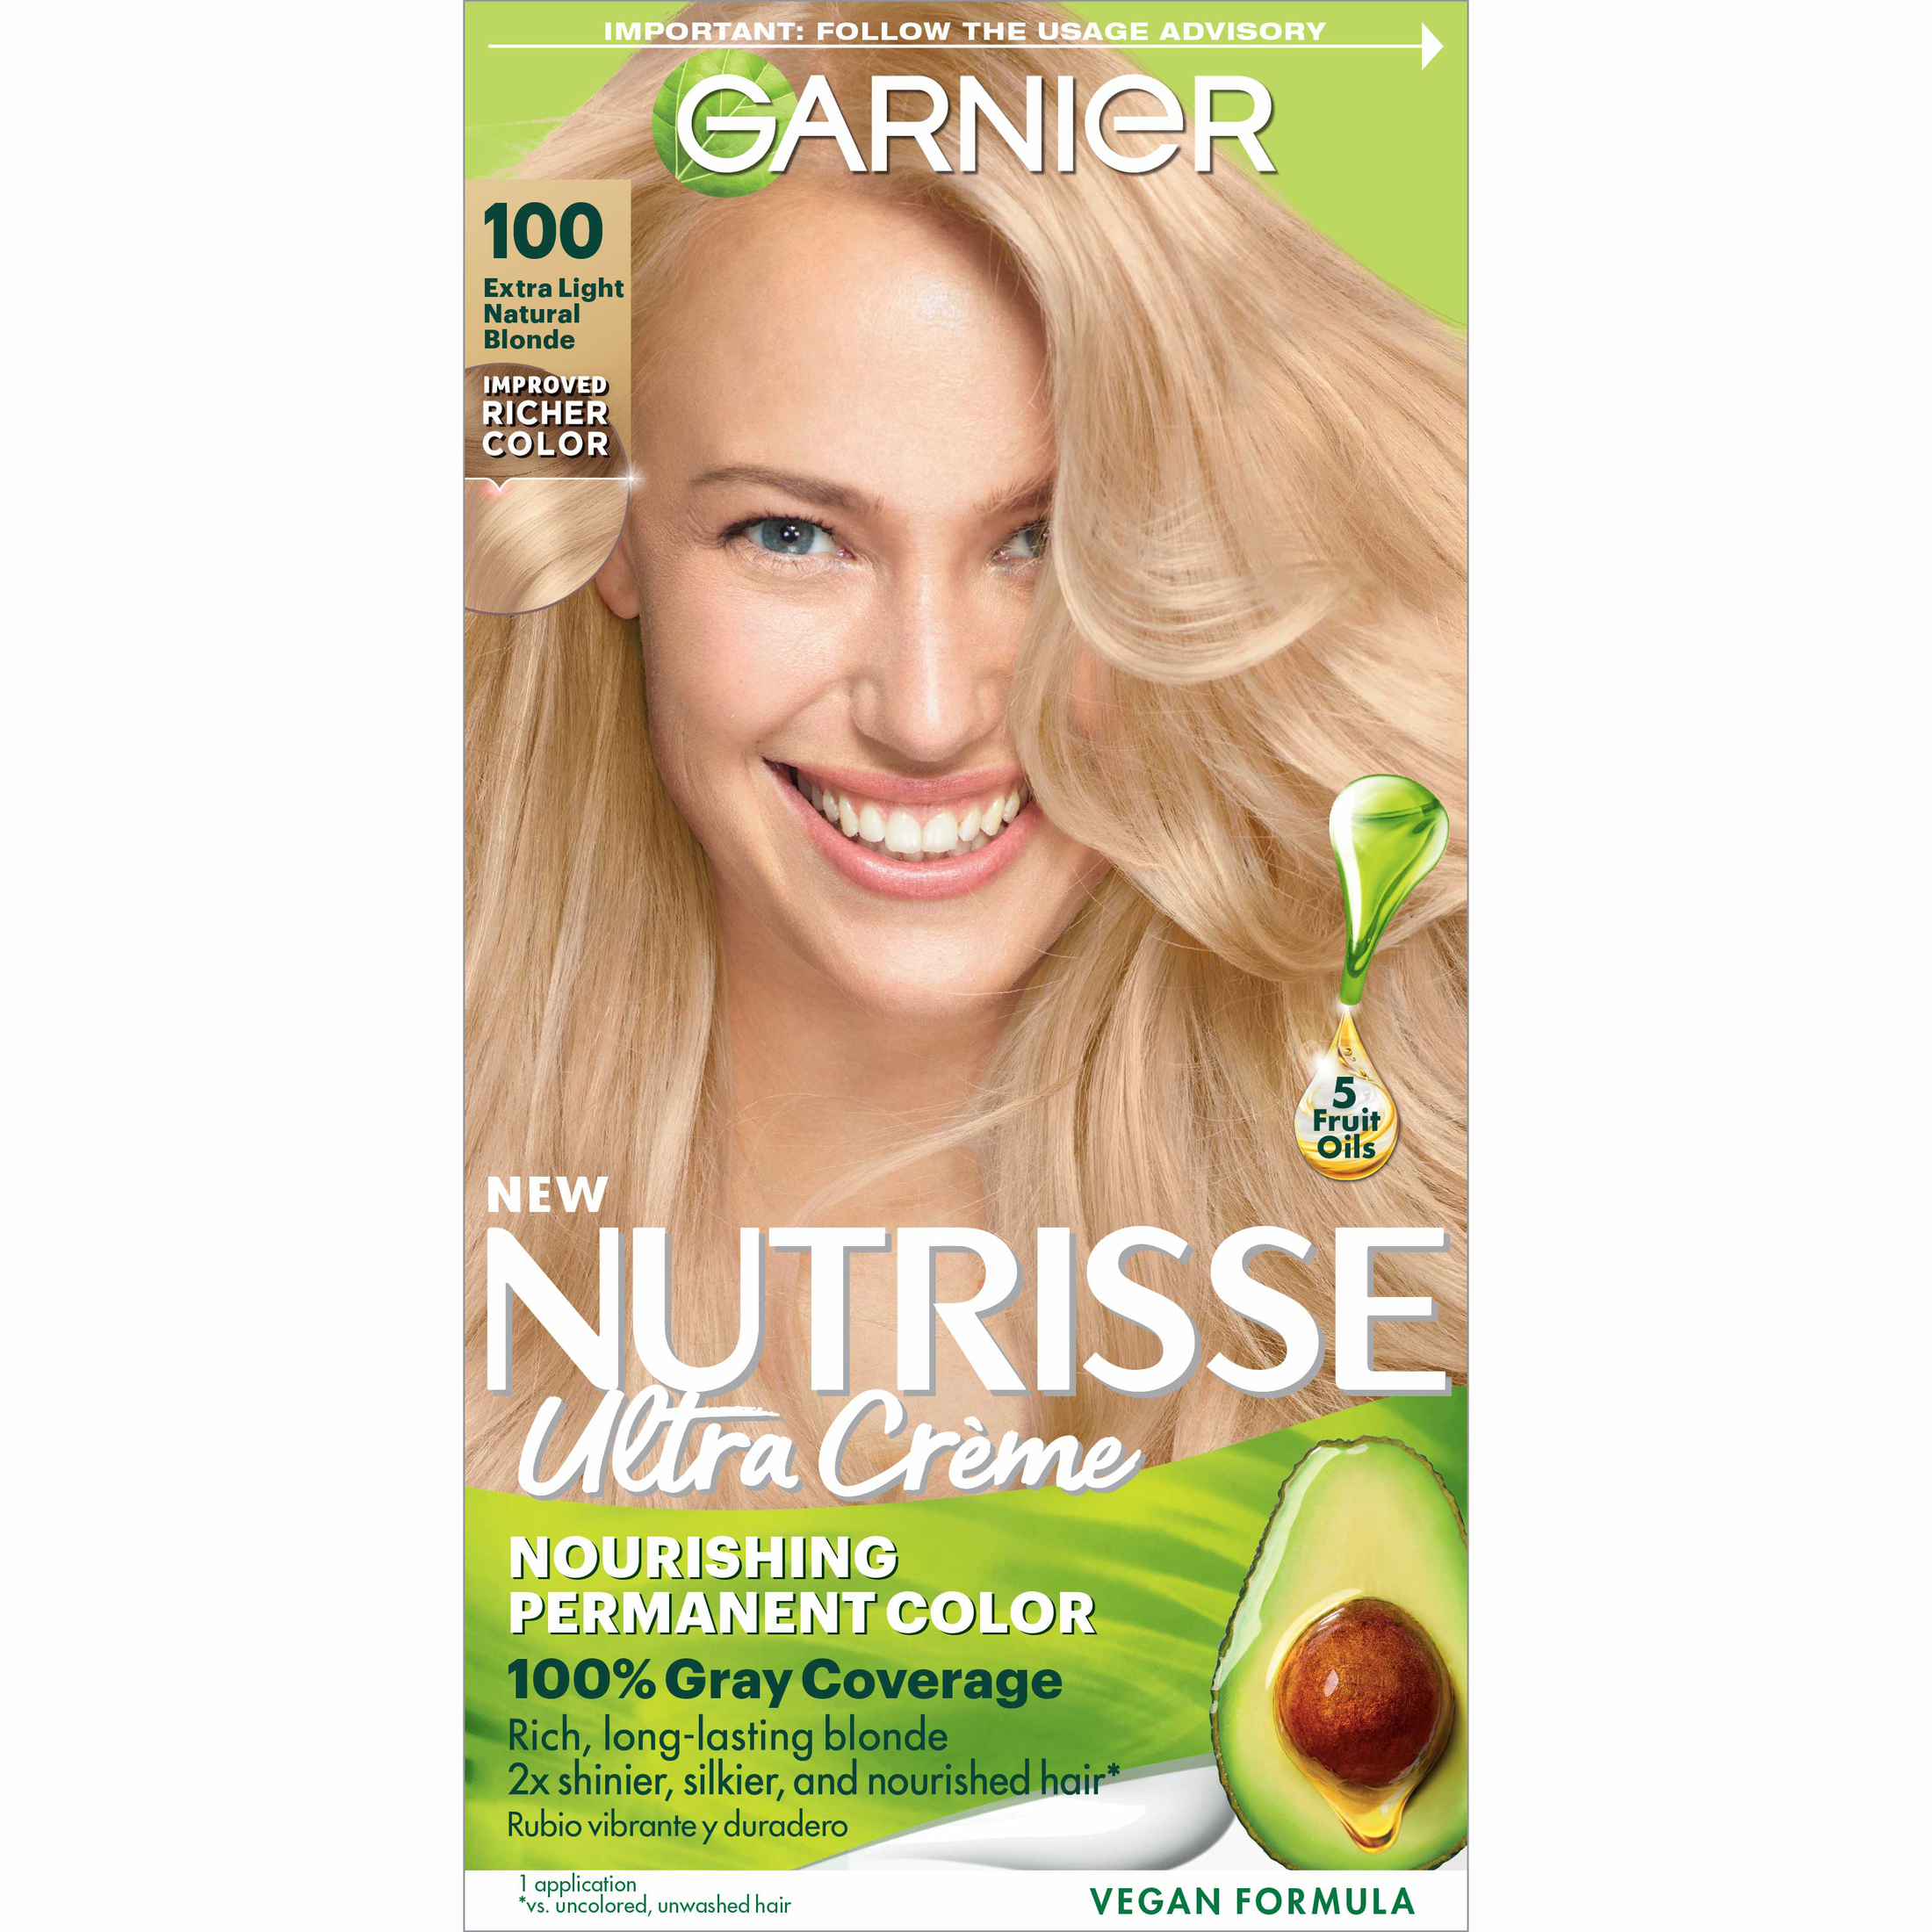 Garnier Nutrisse Nourishing Hair Color Creme, 100 Extra Light Natural Blonde Chamomile - image 1 of 11